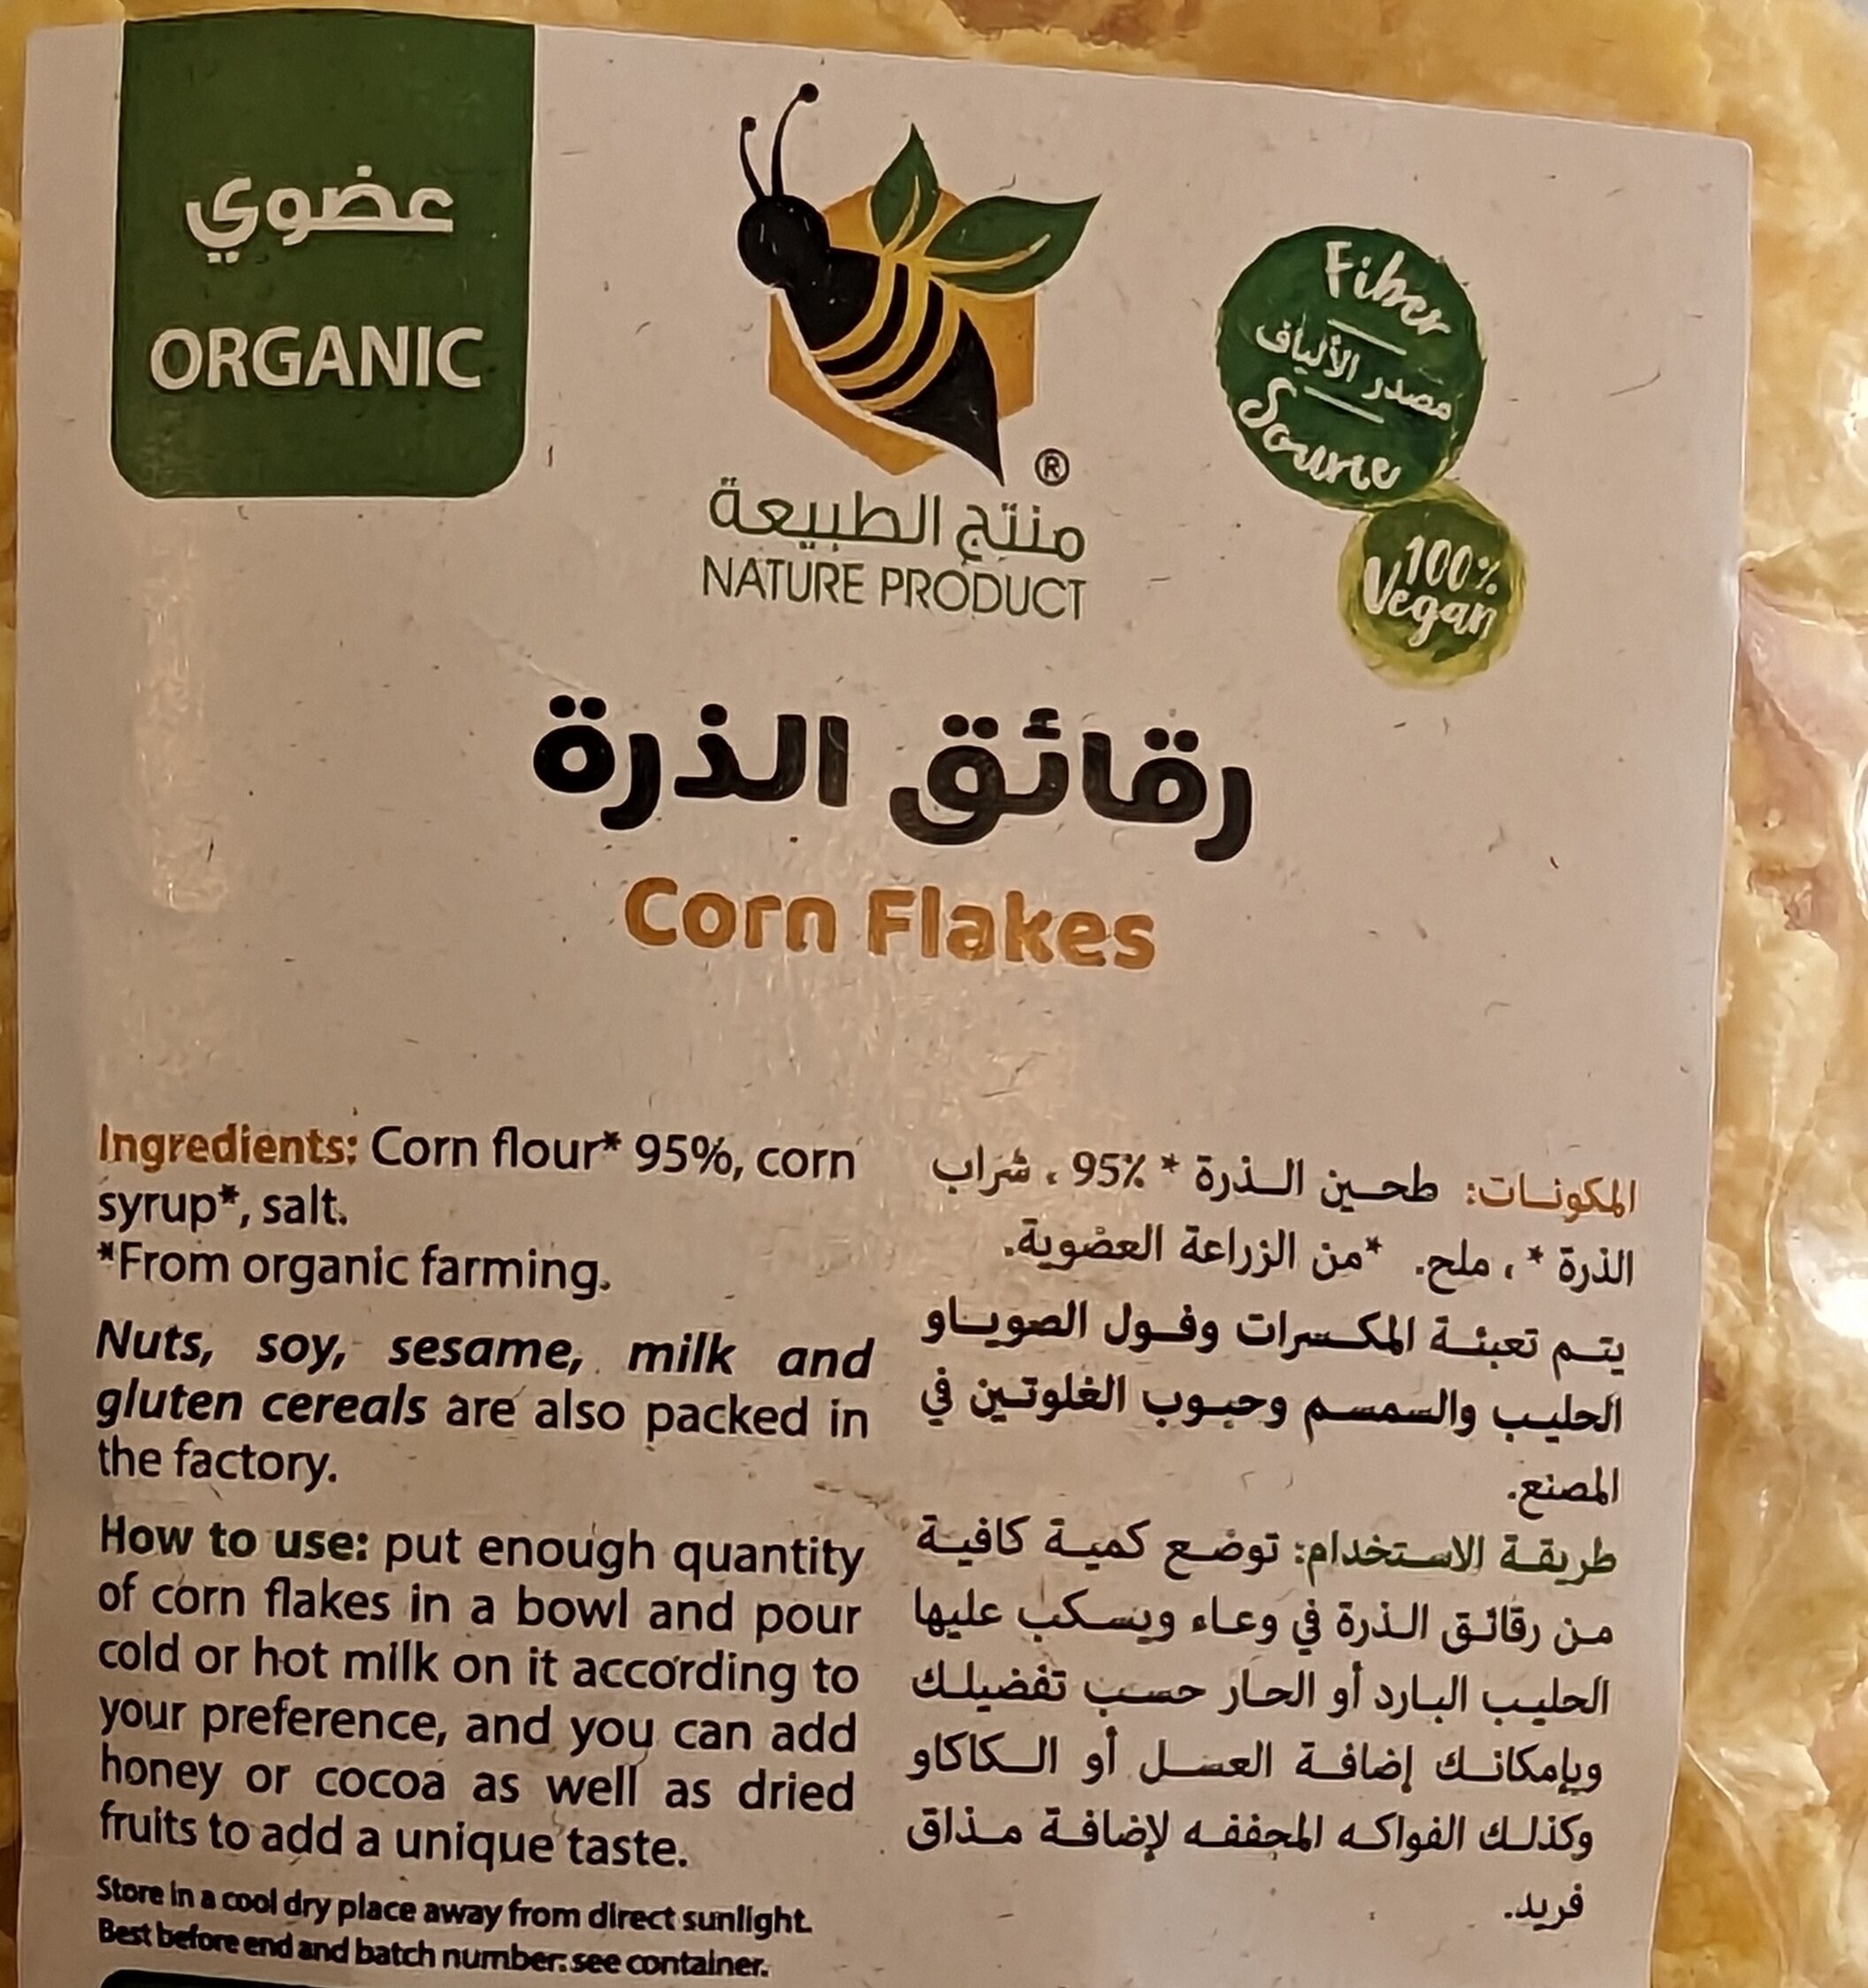 organic corn flakes - Ingredients